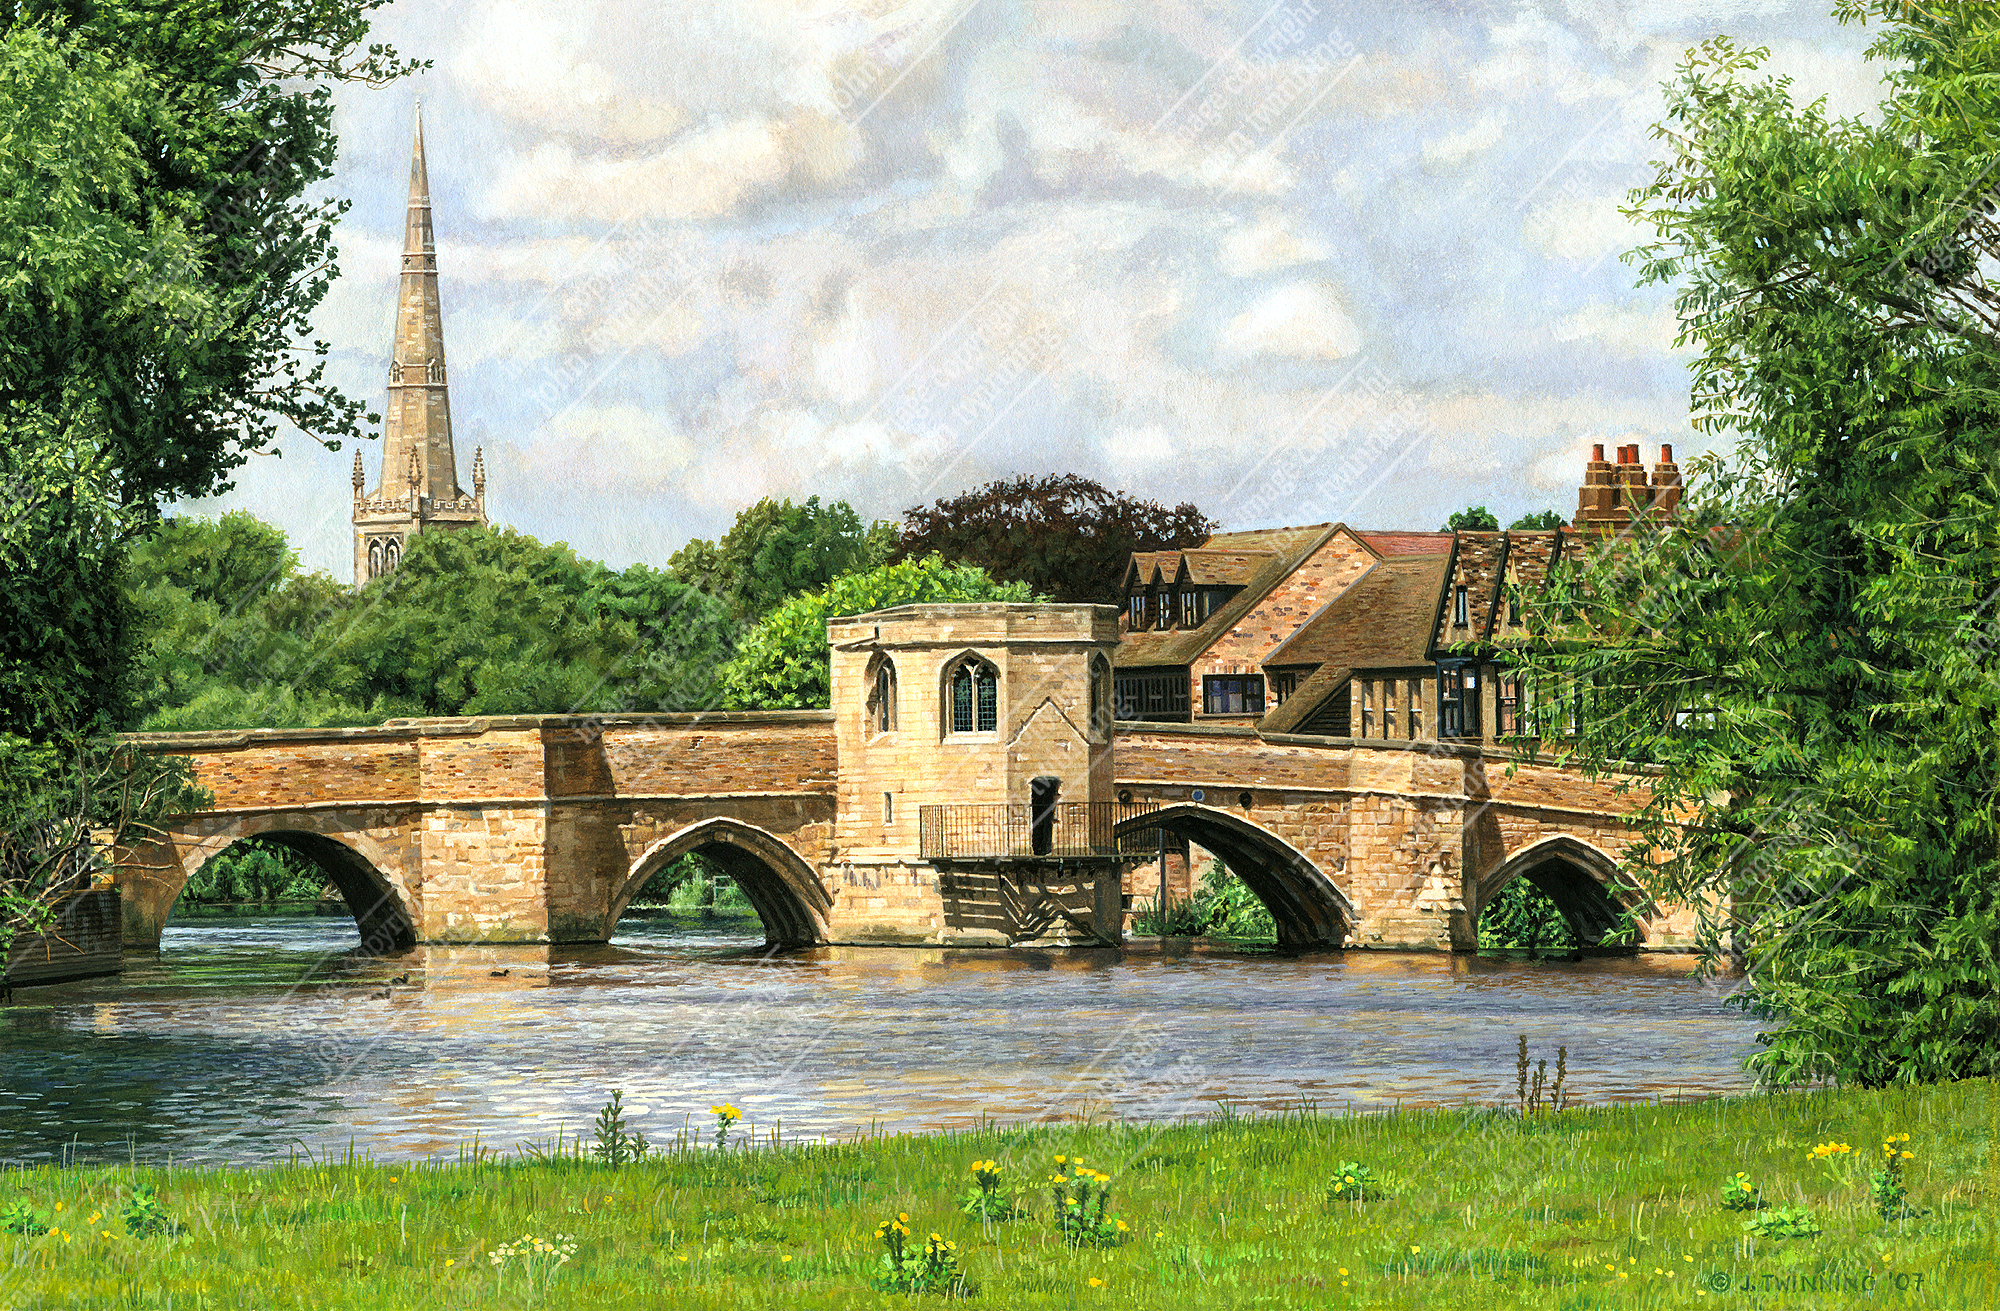 ‘St. Ives Bridge, Full Summer’ – art print from a watercolour painting of this cambridgeshire market town’s historic bridge